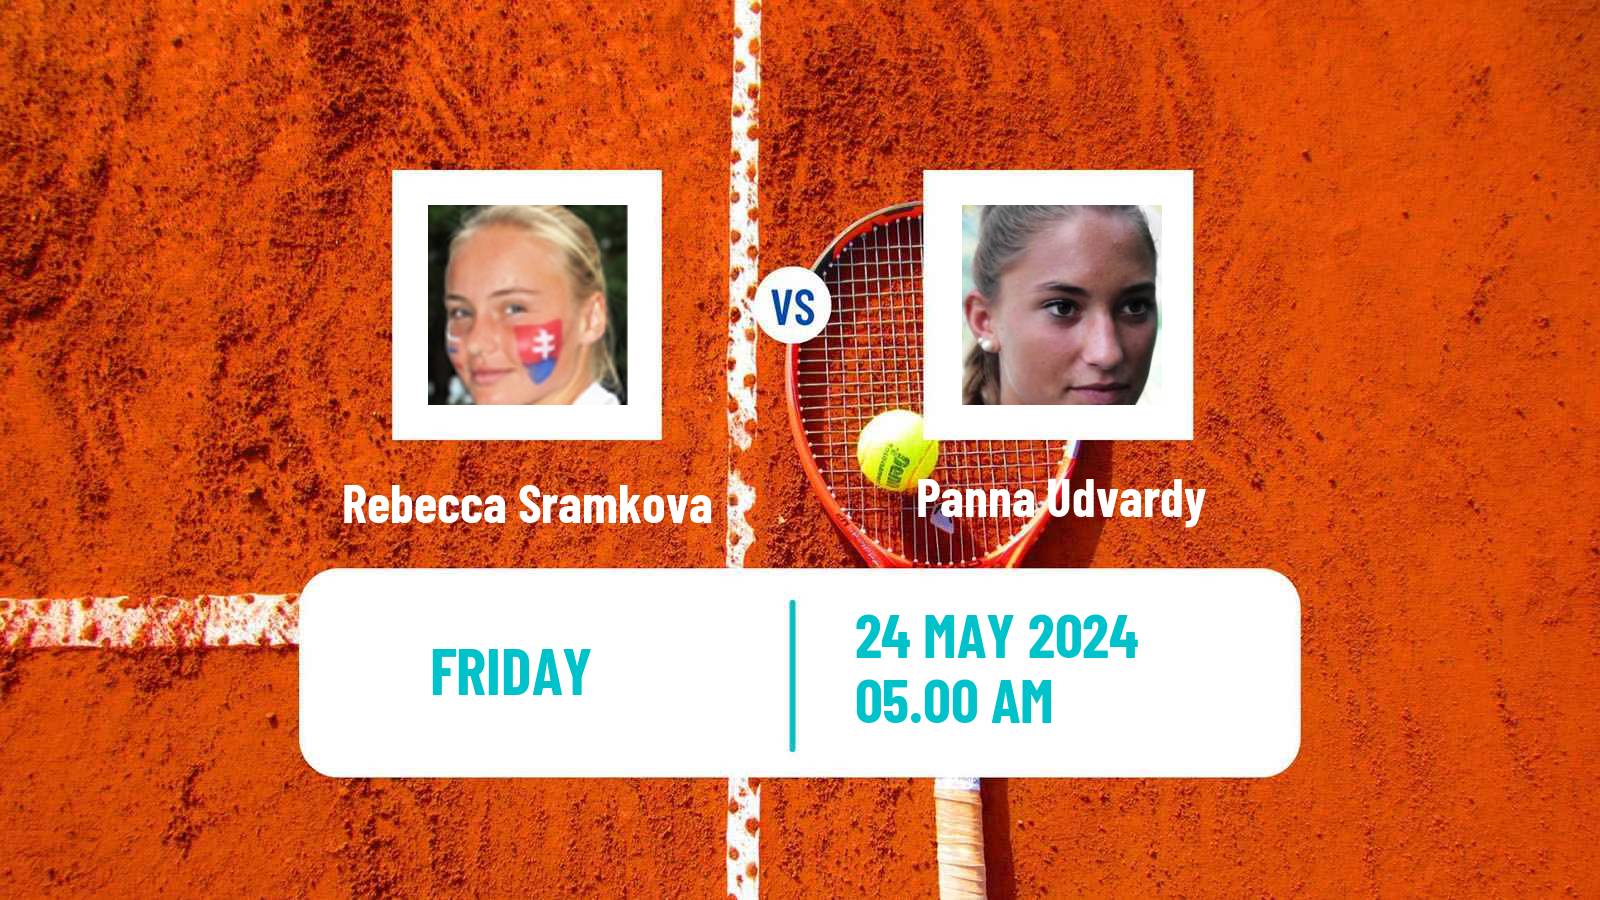 Tennis WTA Roland Garros Rebecca Sramkova - Panna Udvardy